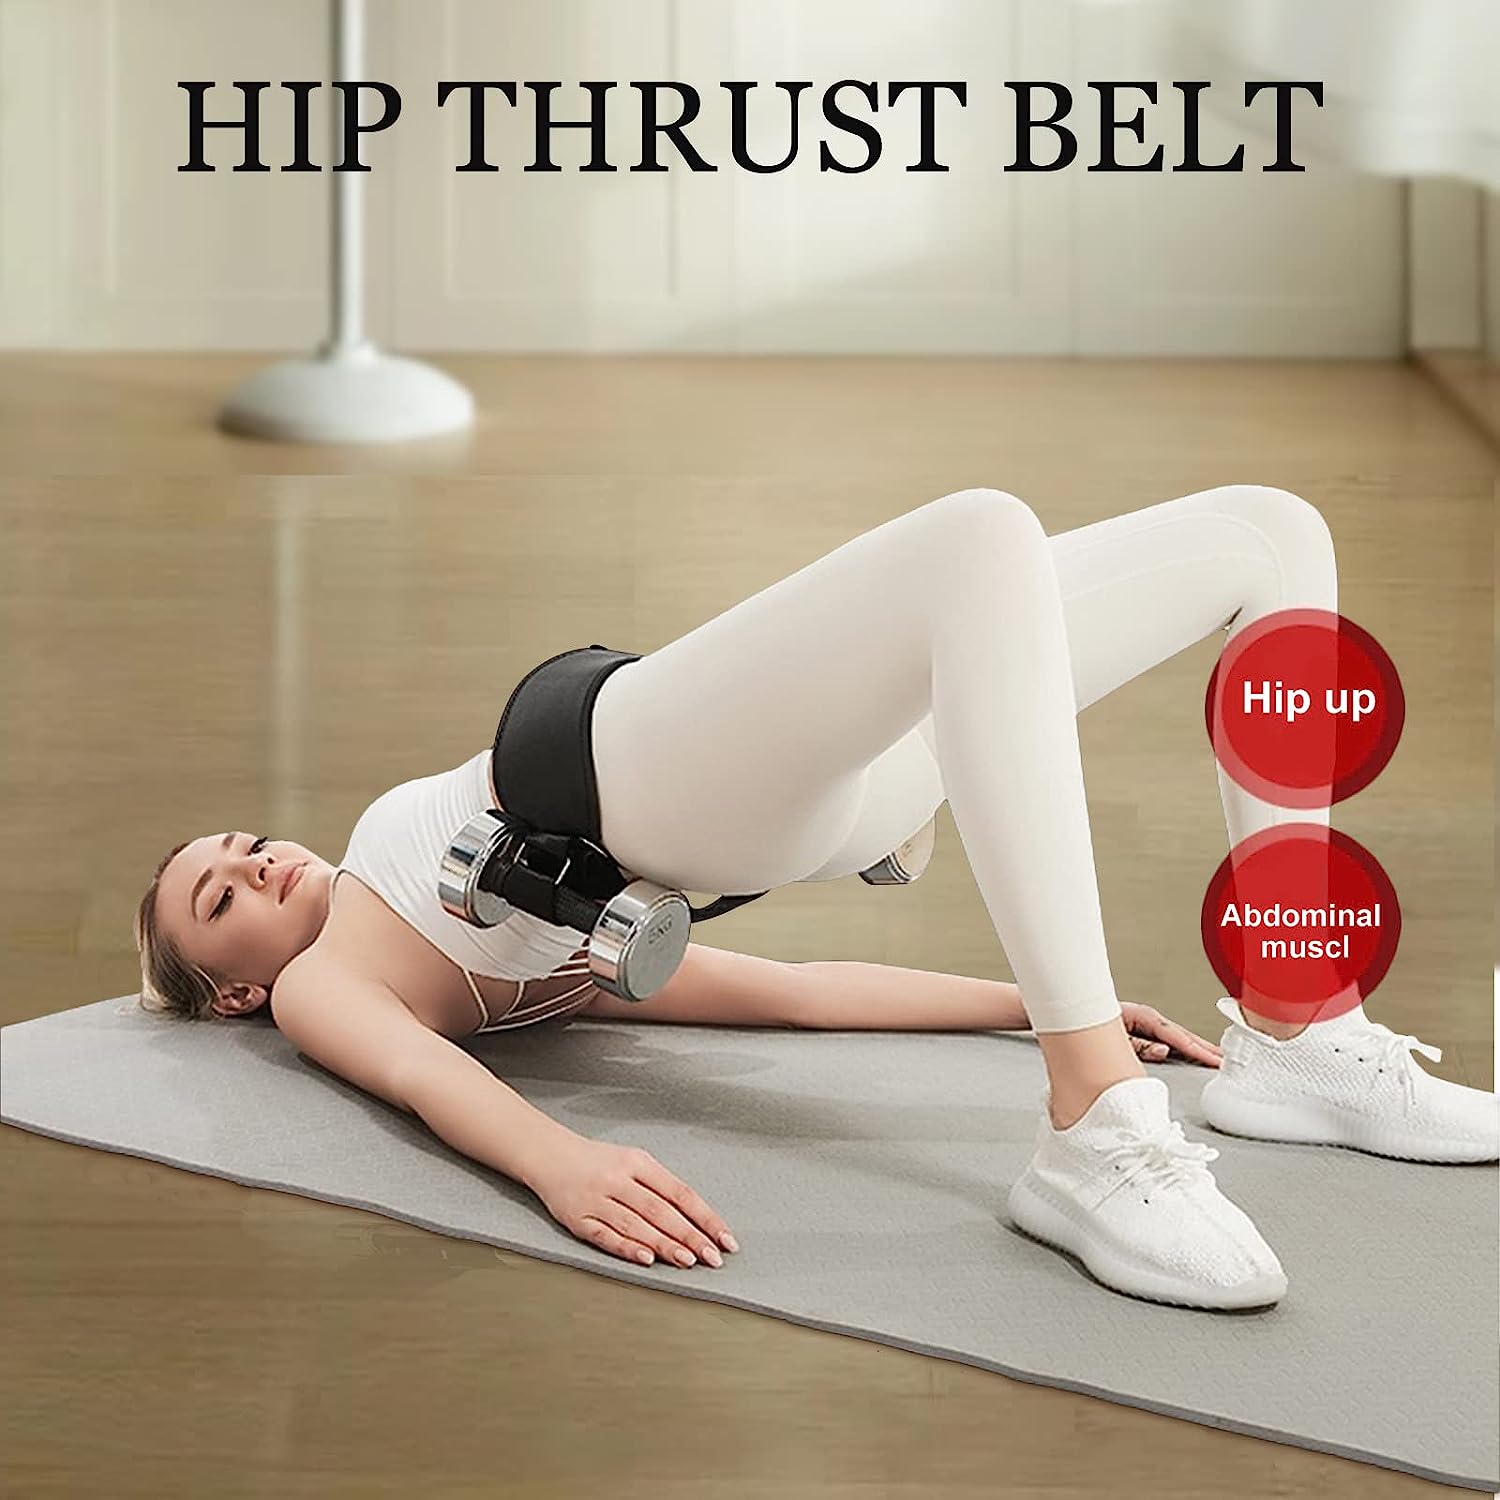 Hip Bridge Belt for Dumbbells Kettlebells, Anti-slip Multifunctional Fitness Nylon Hip Thrust Belt Protects Your Hips to for Gym or Home Gym Workout